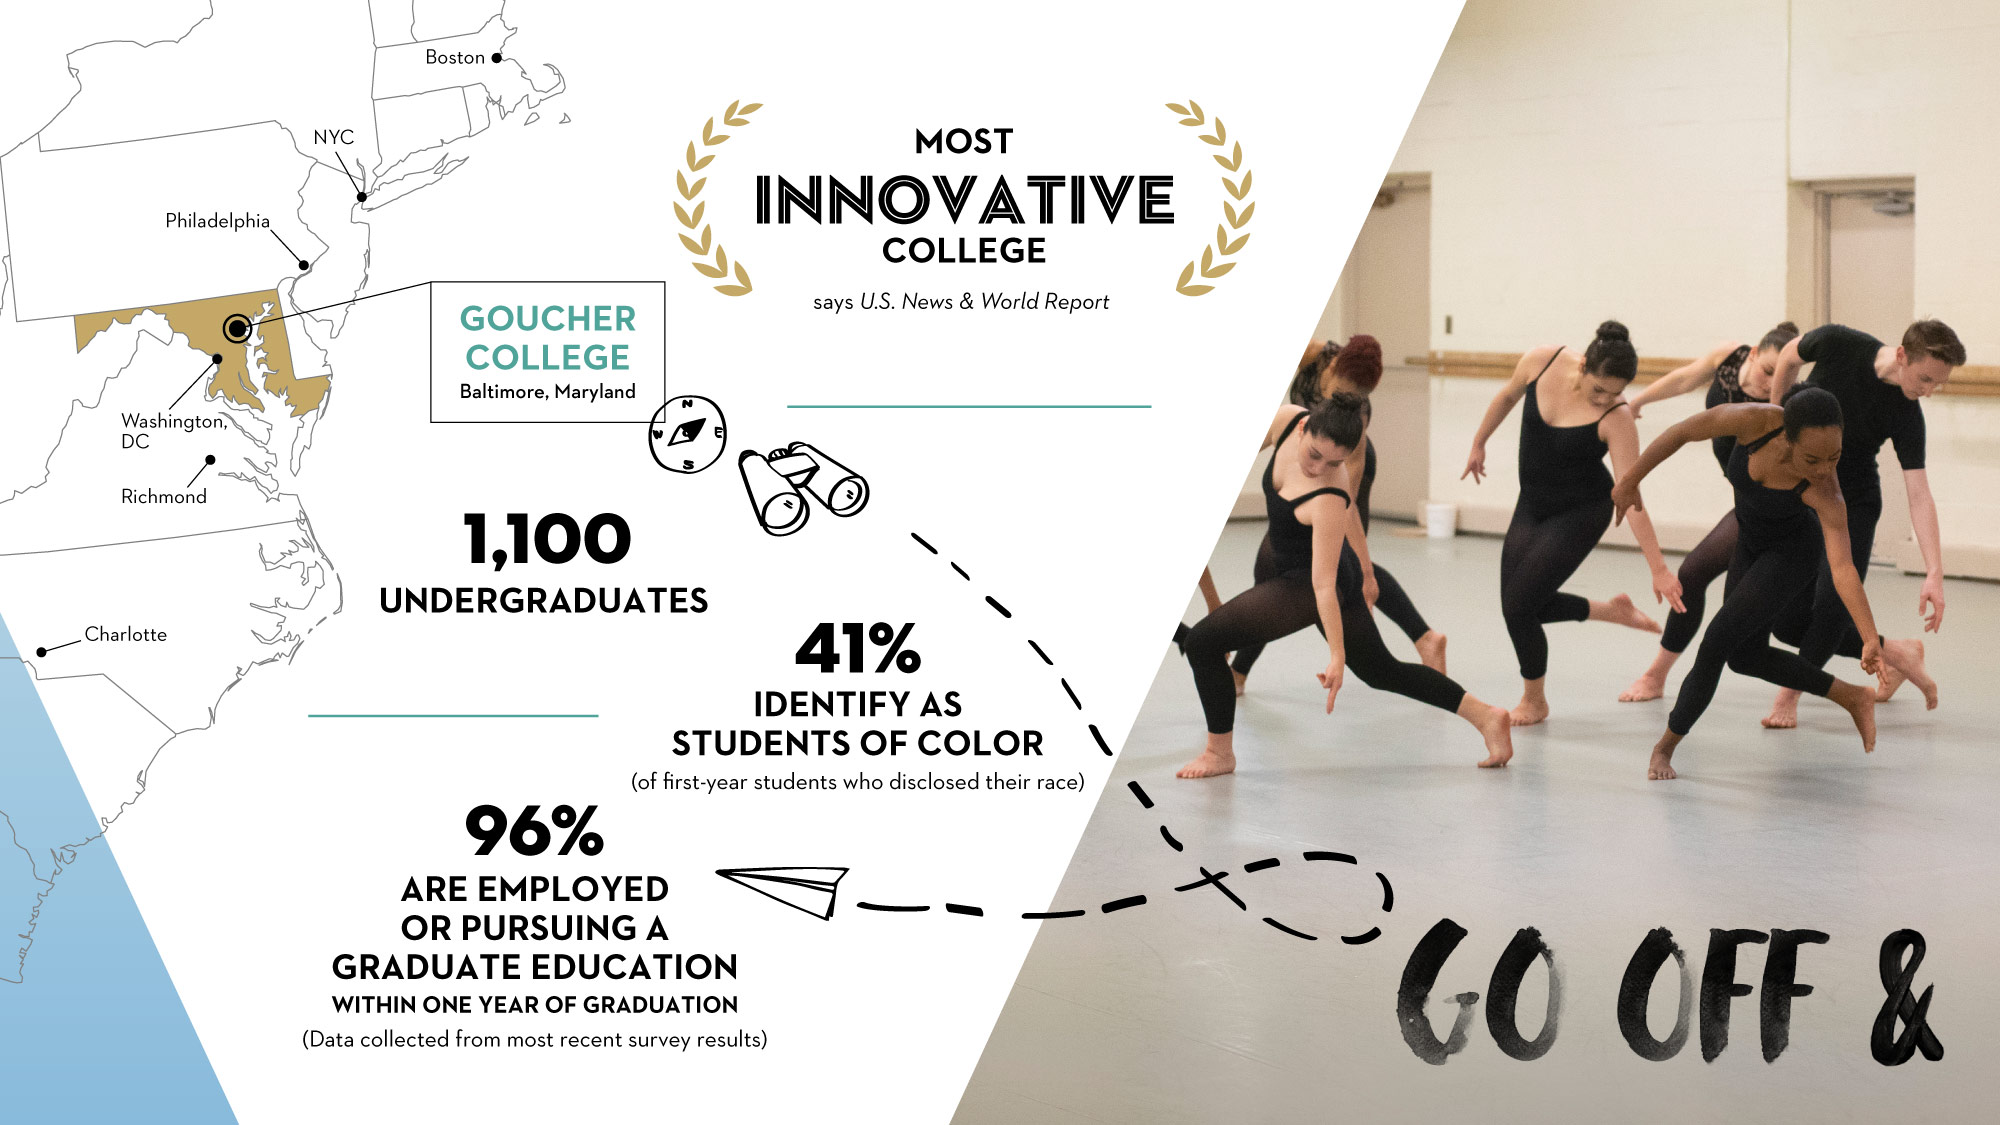 Most innovative college says u.s. news & world report